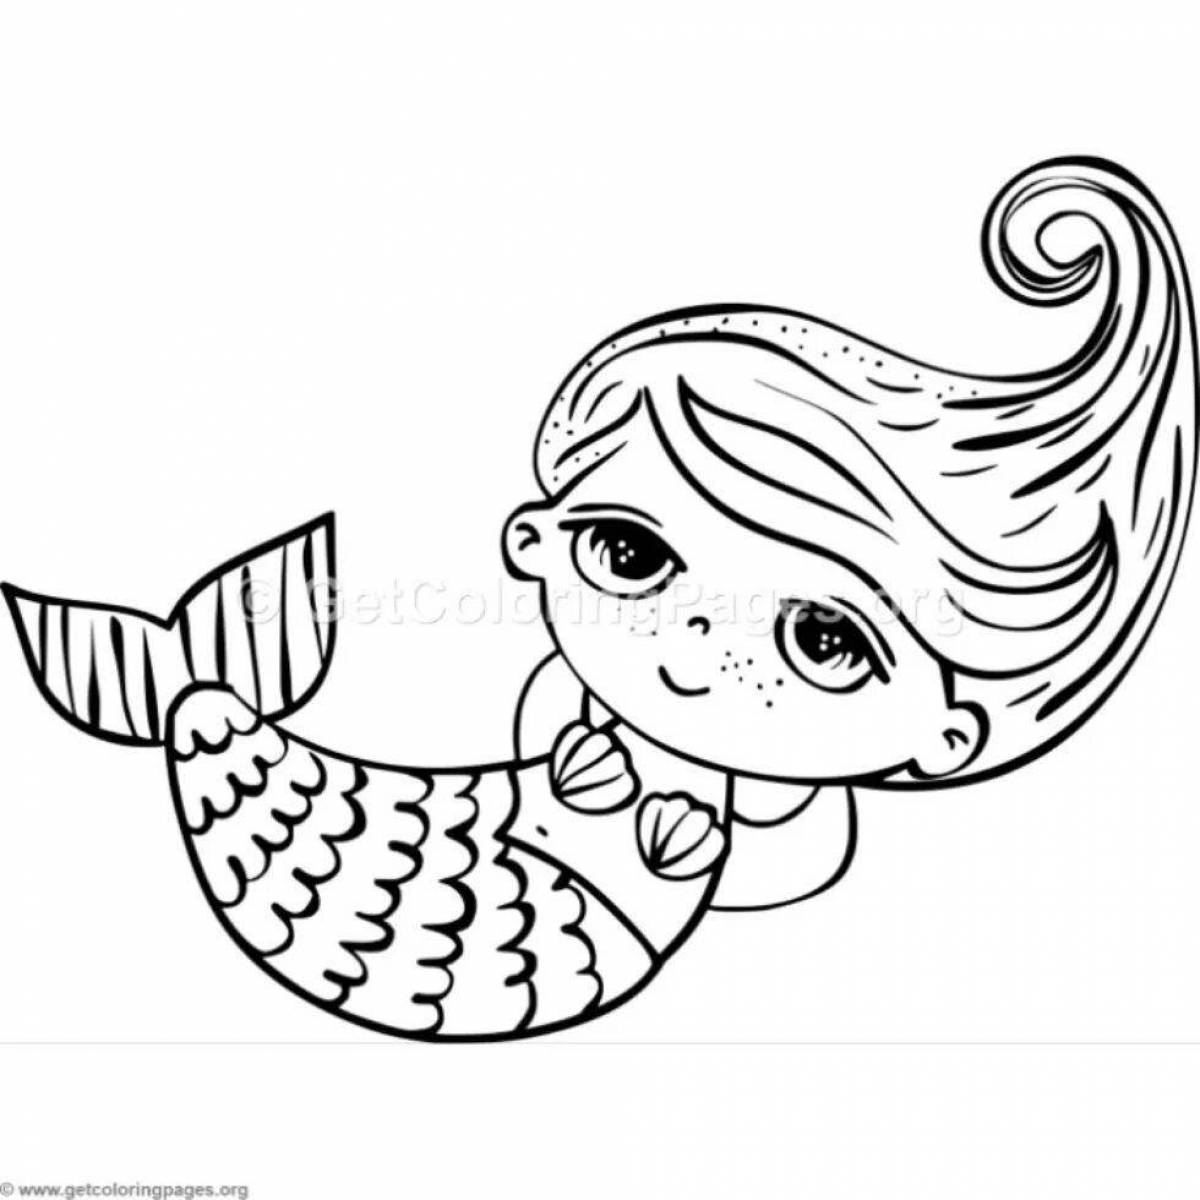 Joyful coloring doll lol little mermaid